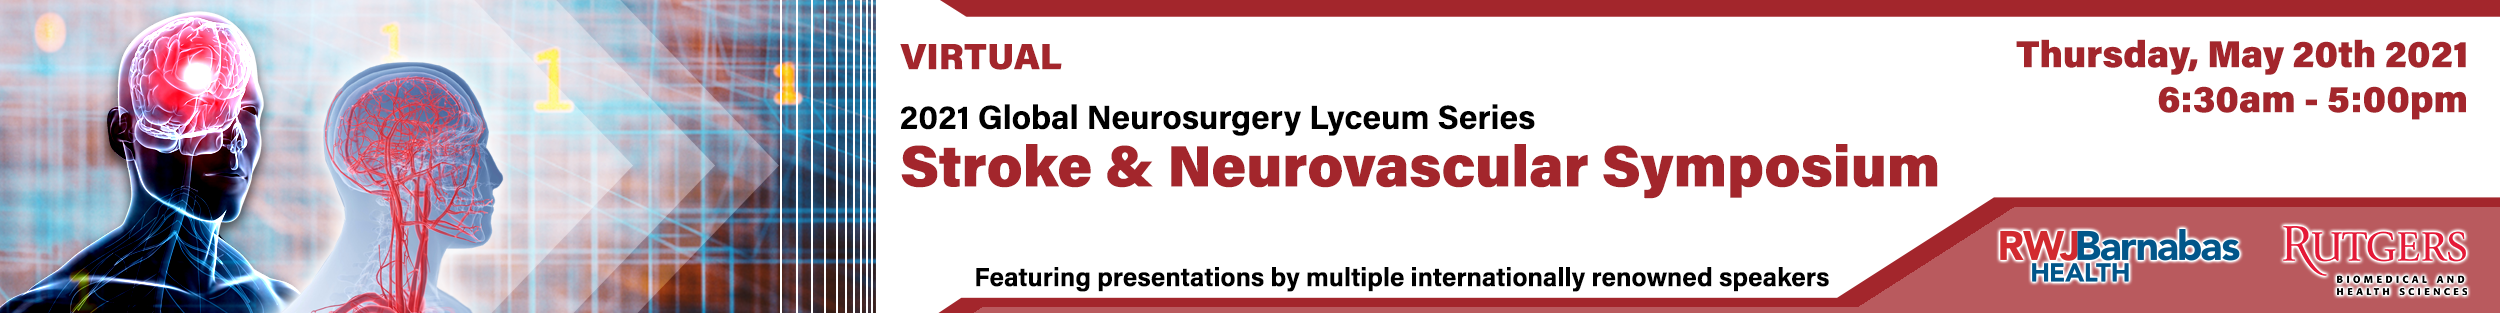 2021 Global Neurosurgery Lyceum Series: Stroke and Neurovascular Symposium Banner